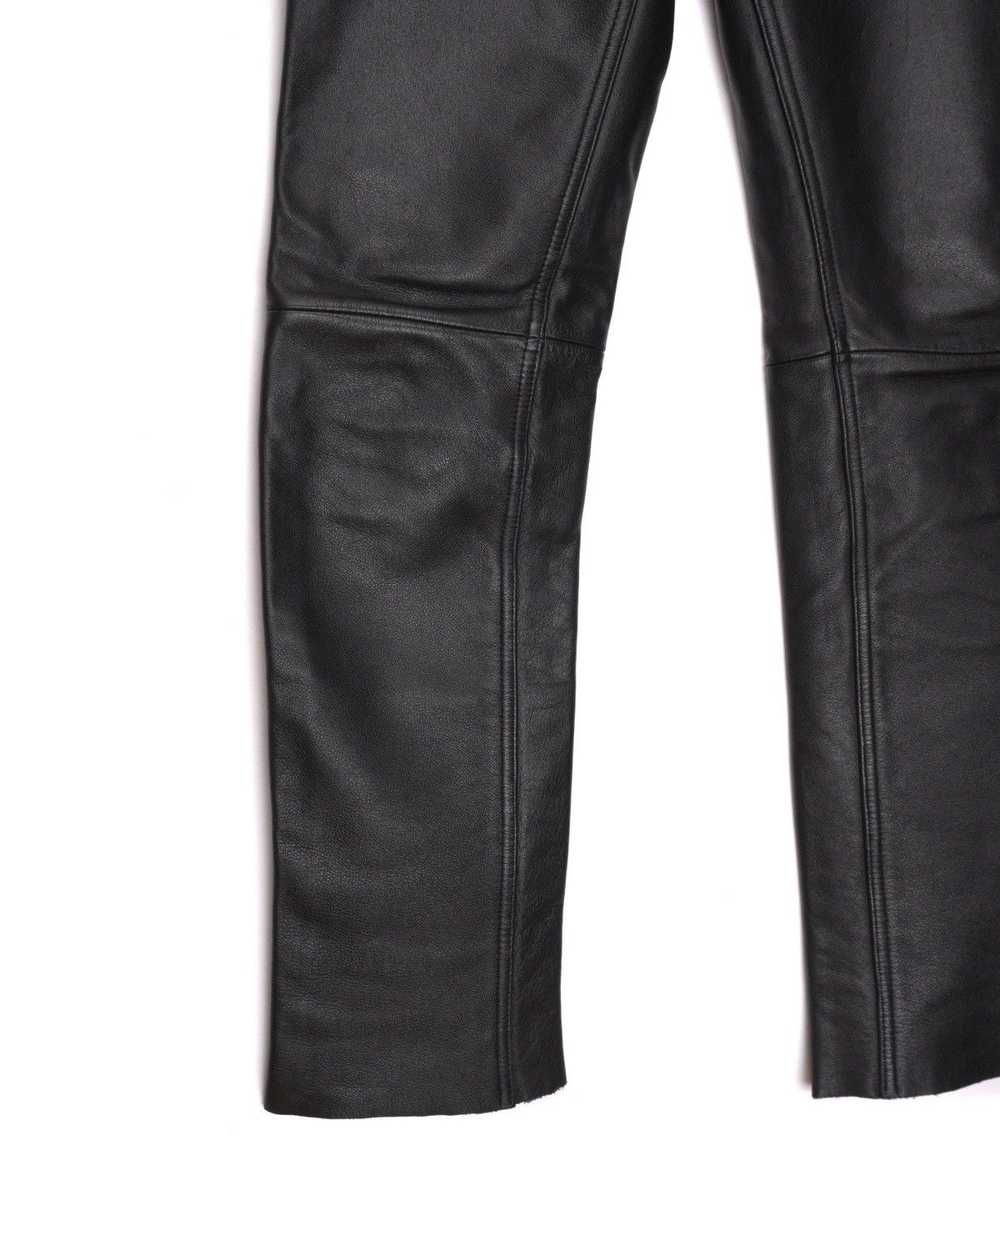 Levi's Vintage Levi’s Genuine Leather Black Pants - image 5